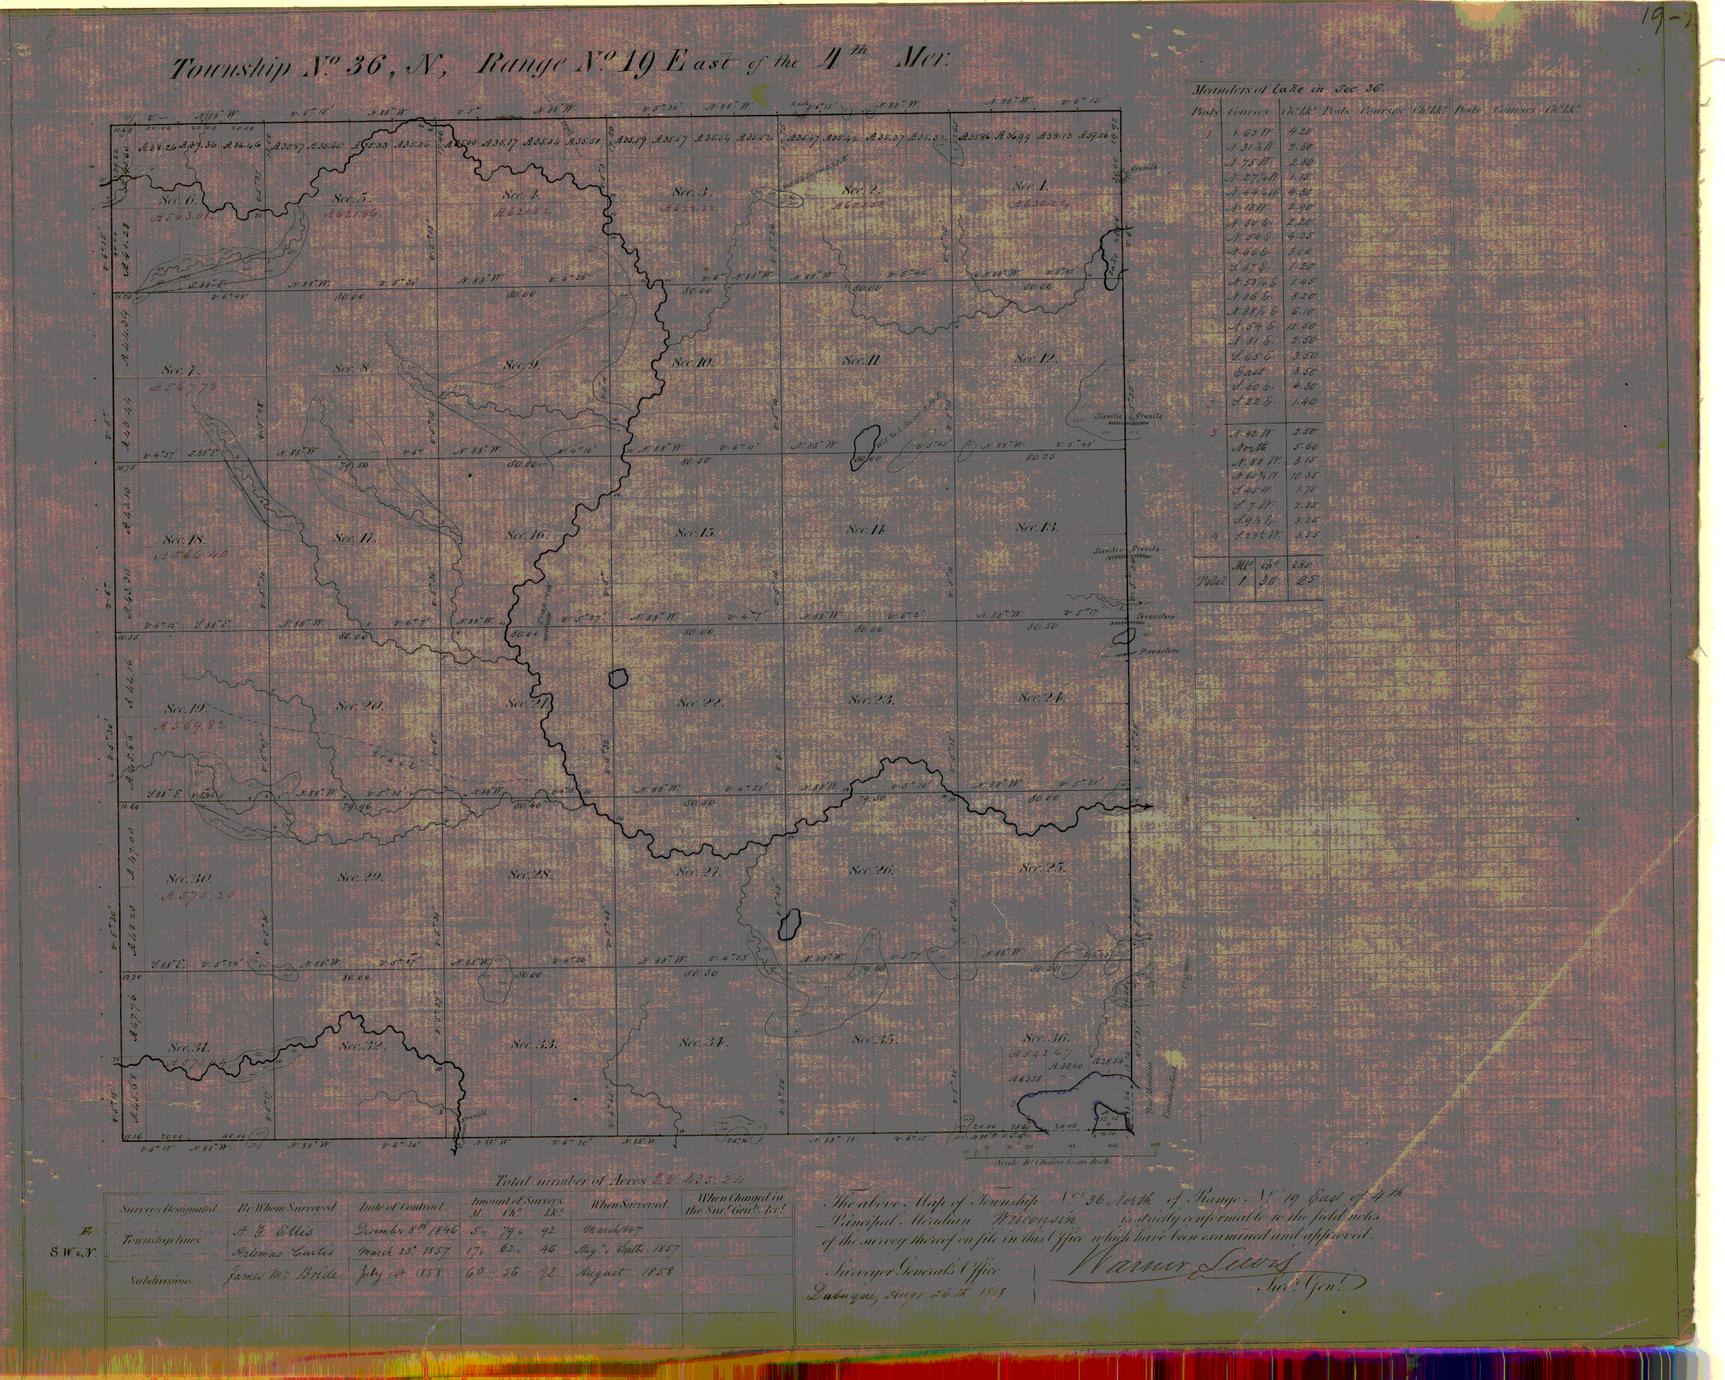 [Public Land Survey System map: Wisconsin Township 36 North, Range 19 East]